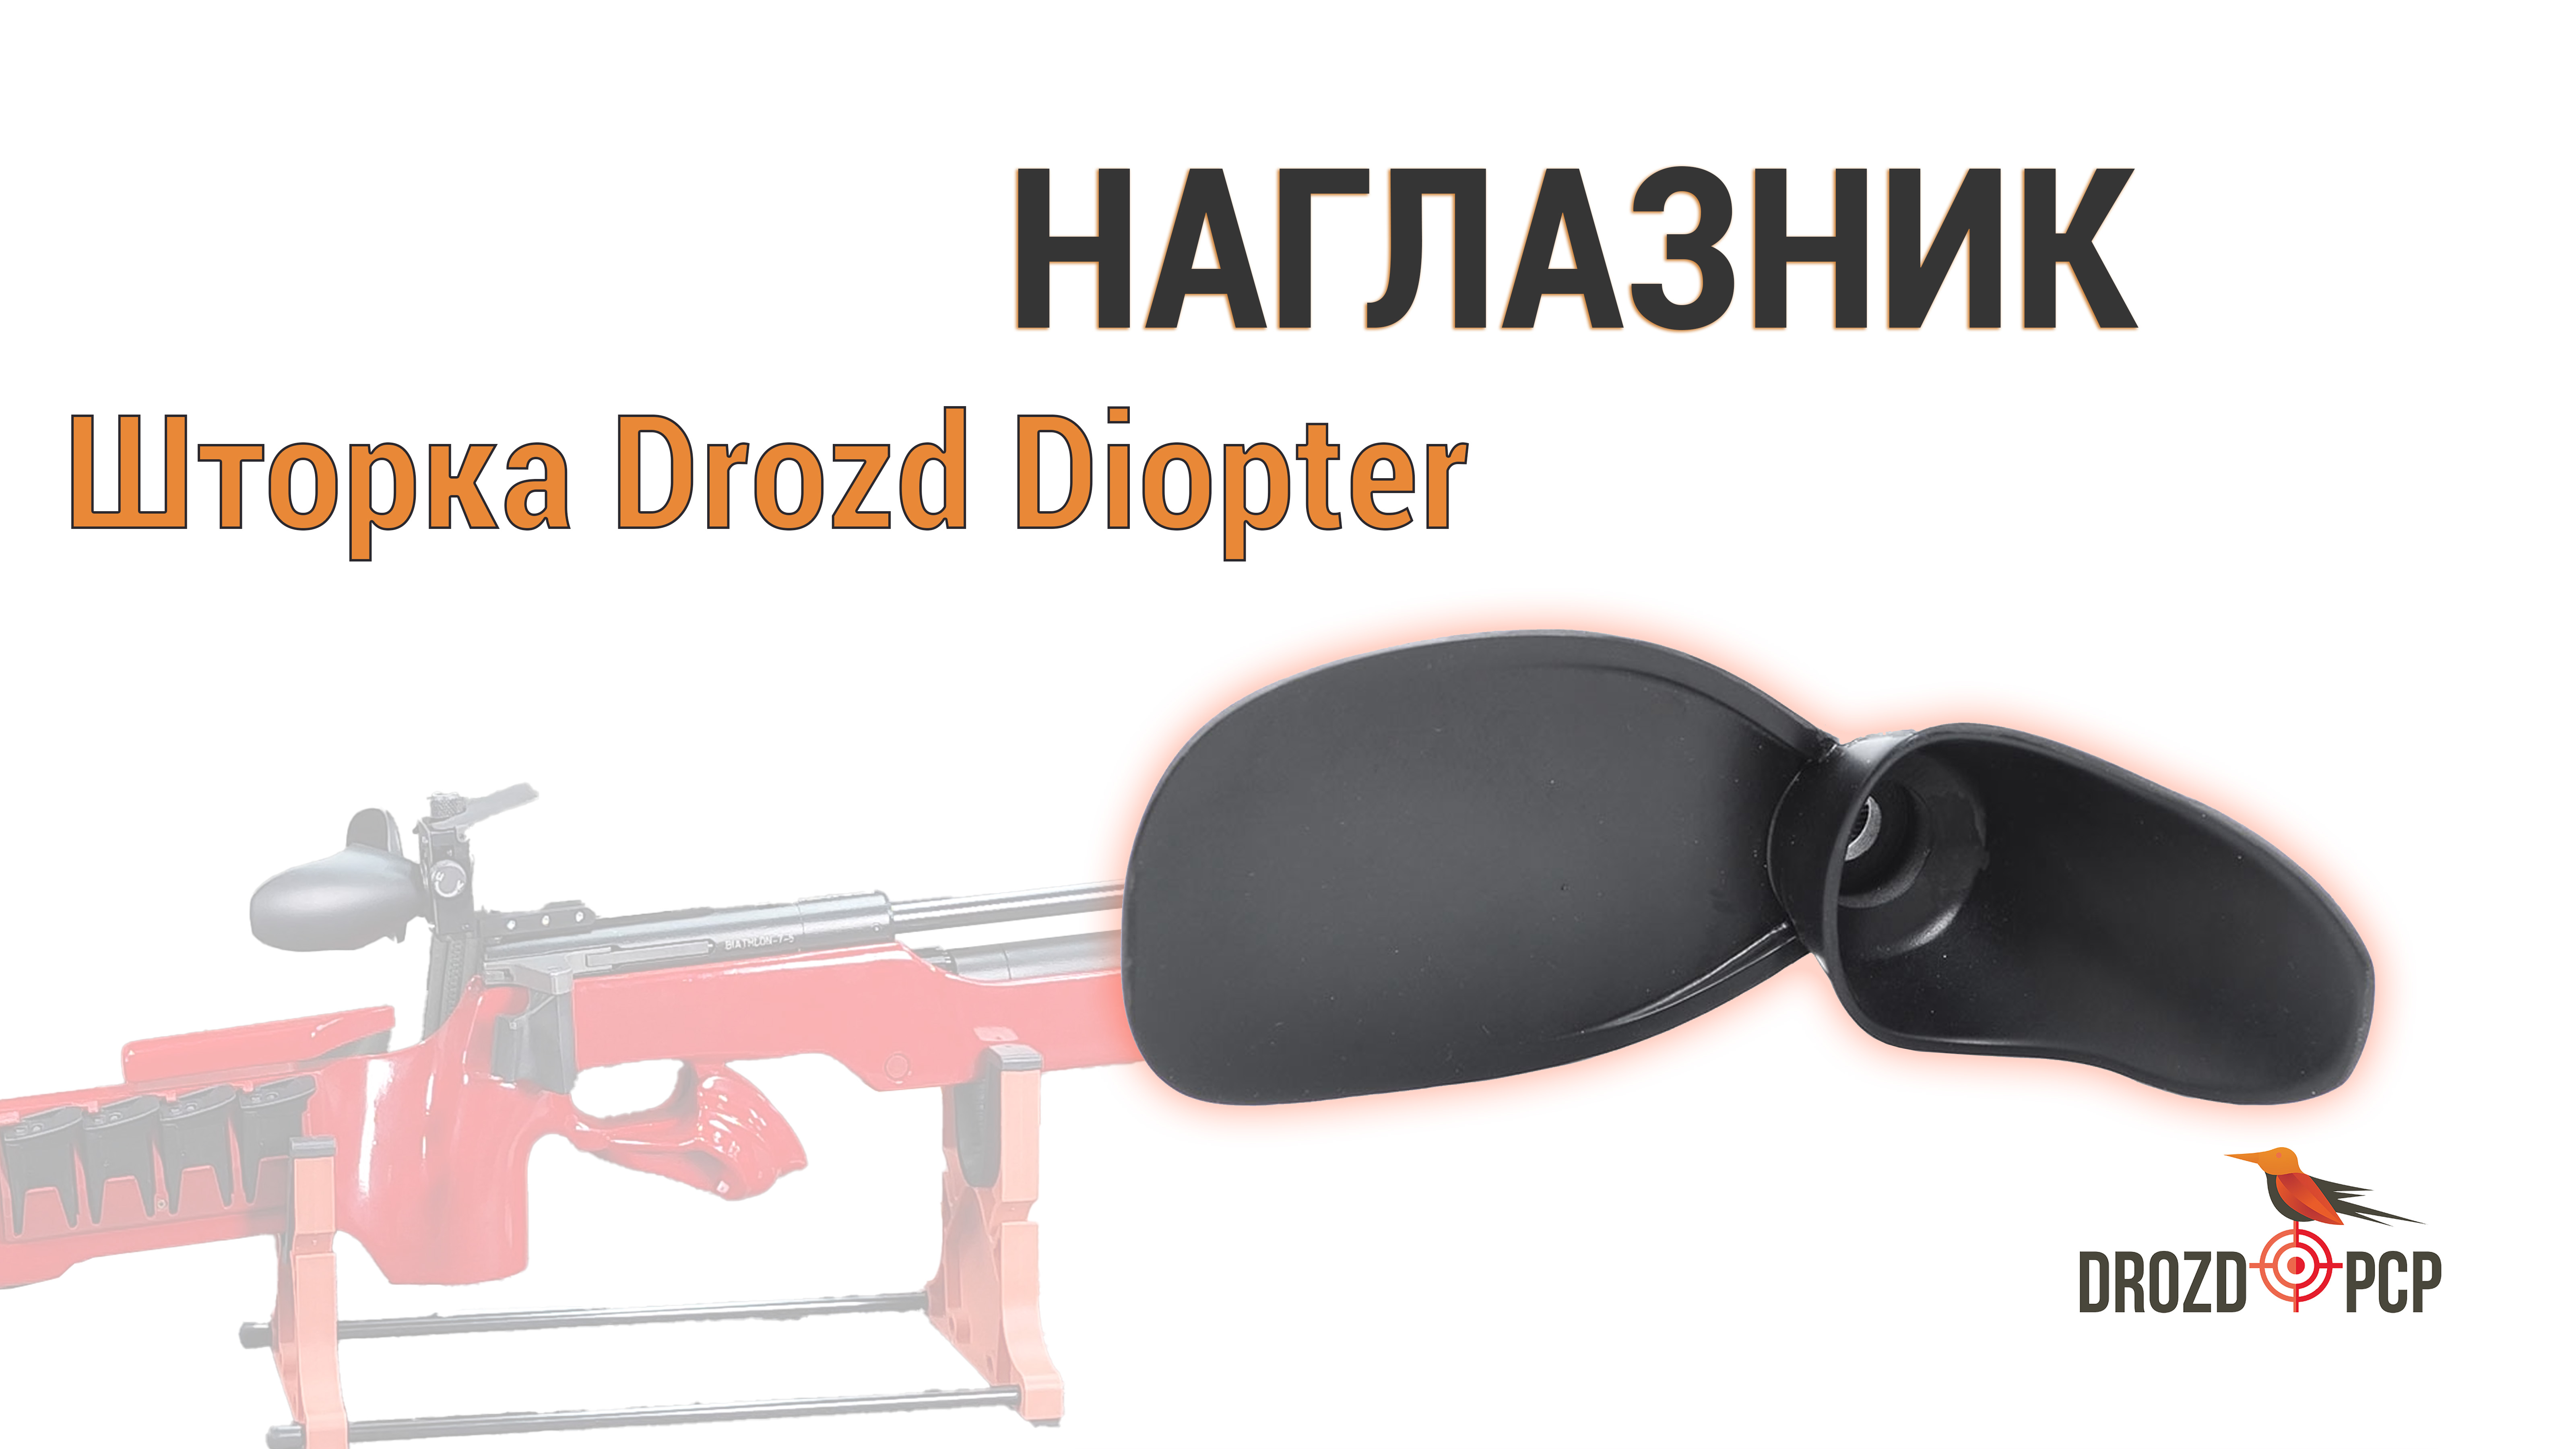 Наглазник Шторка Drozd Diopter БИ-7, Anschutz